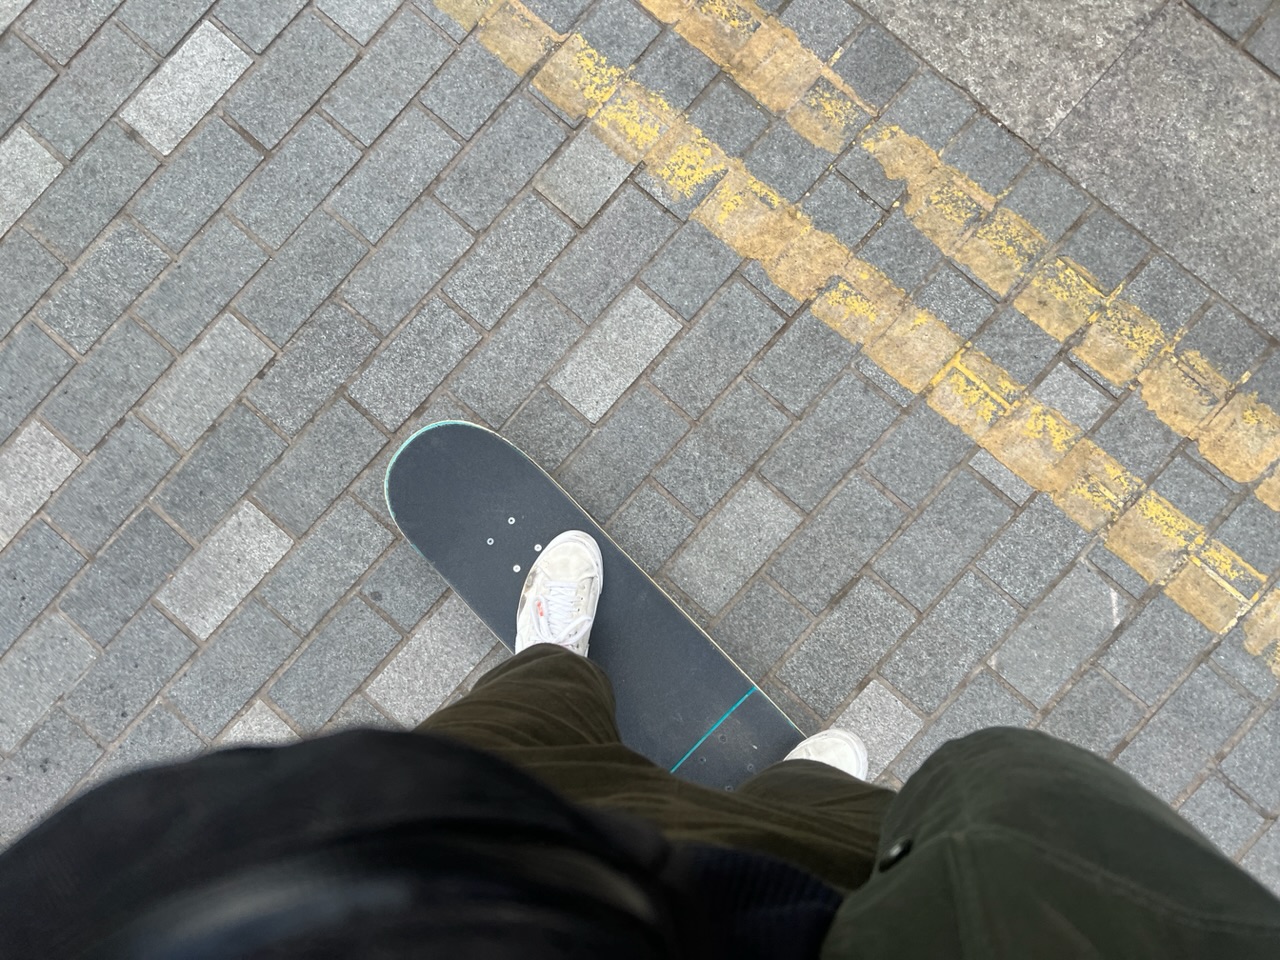 POV view of me riding skateboard on brick road 